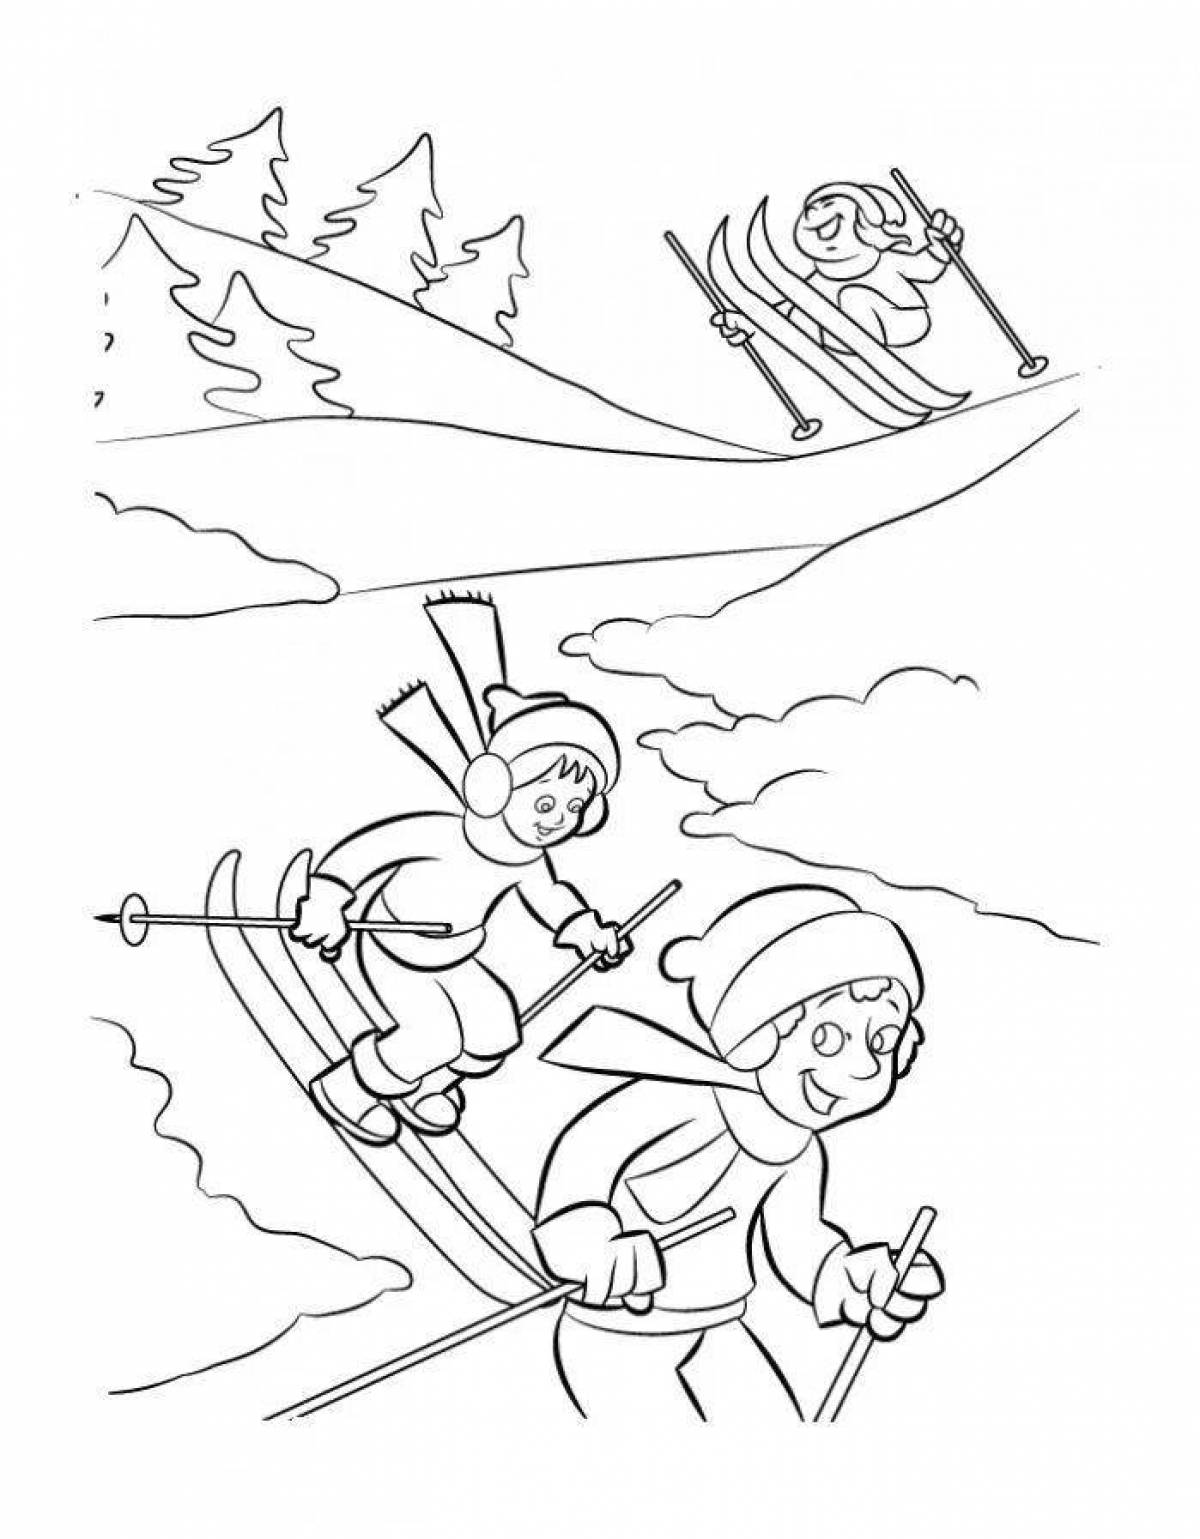 Coloring page joyful boy on skis